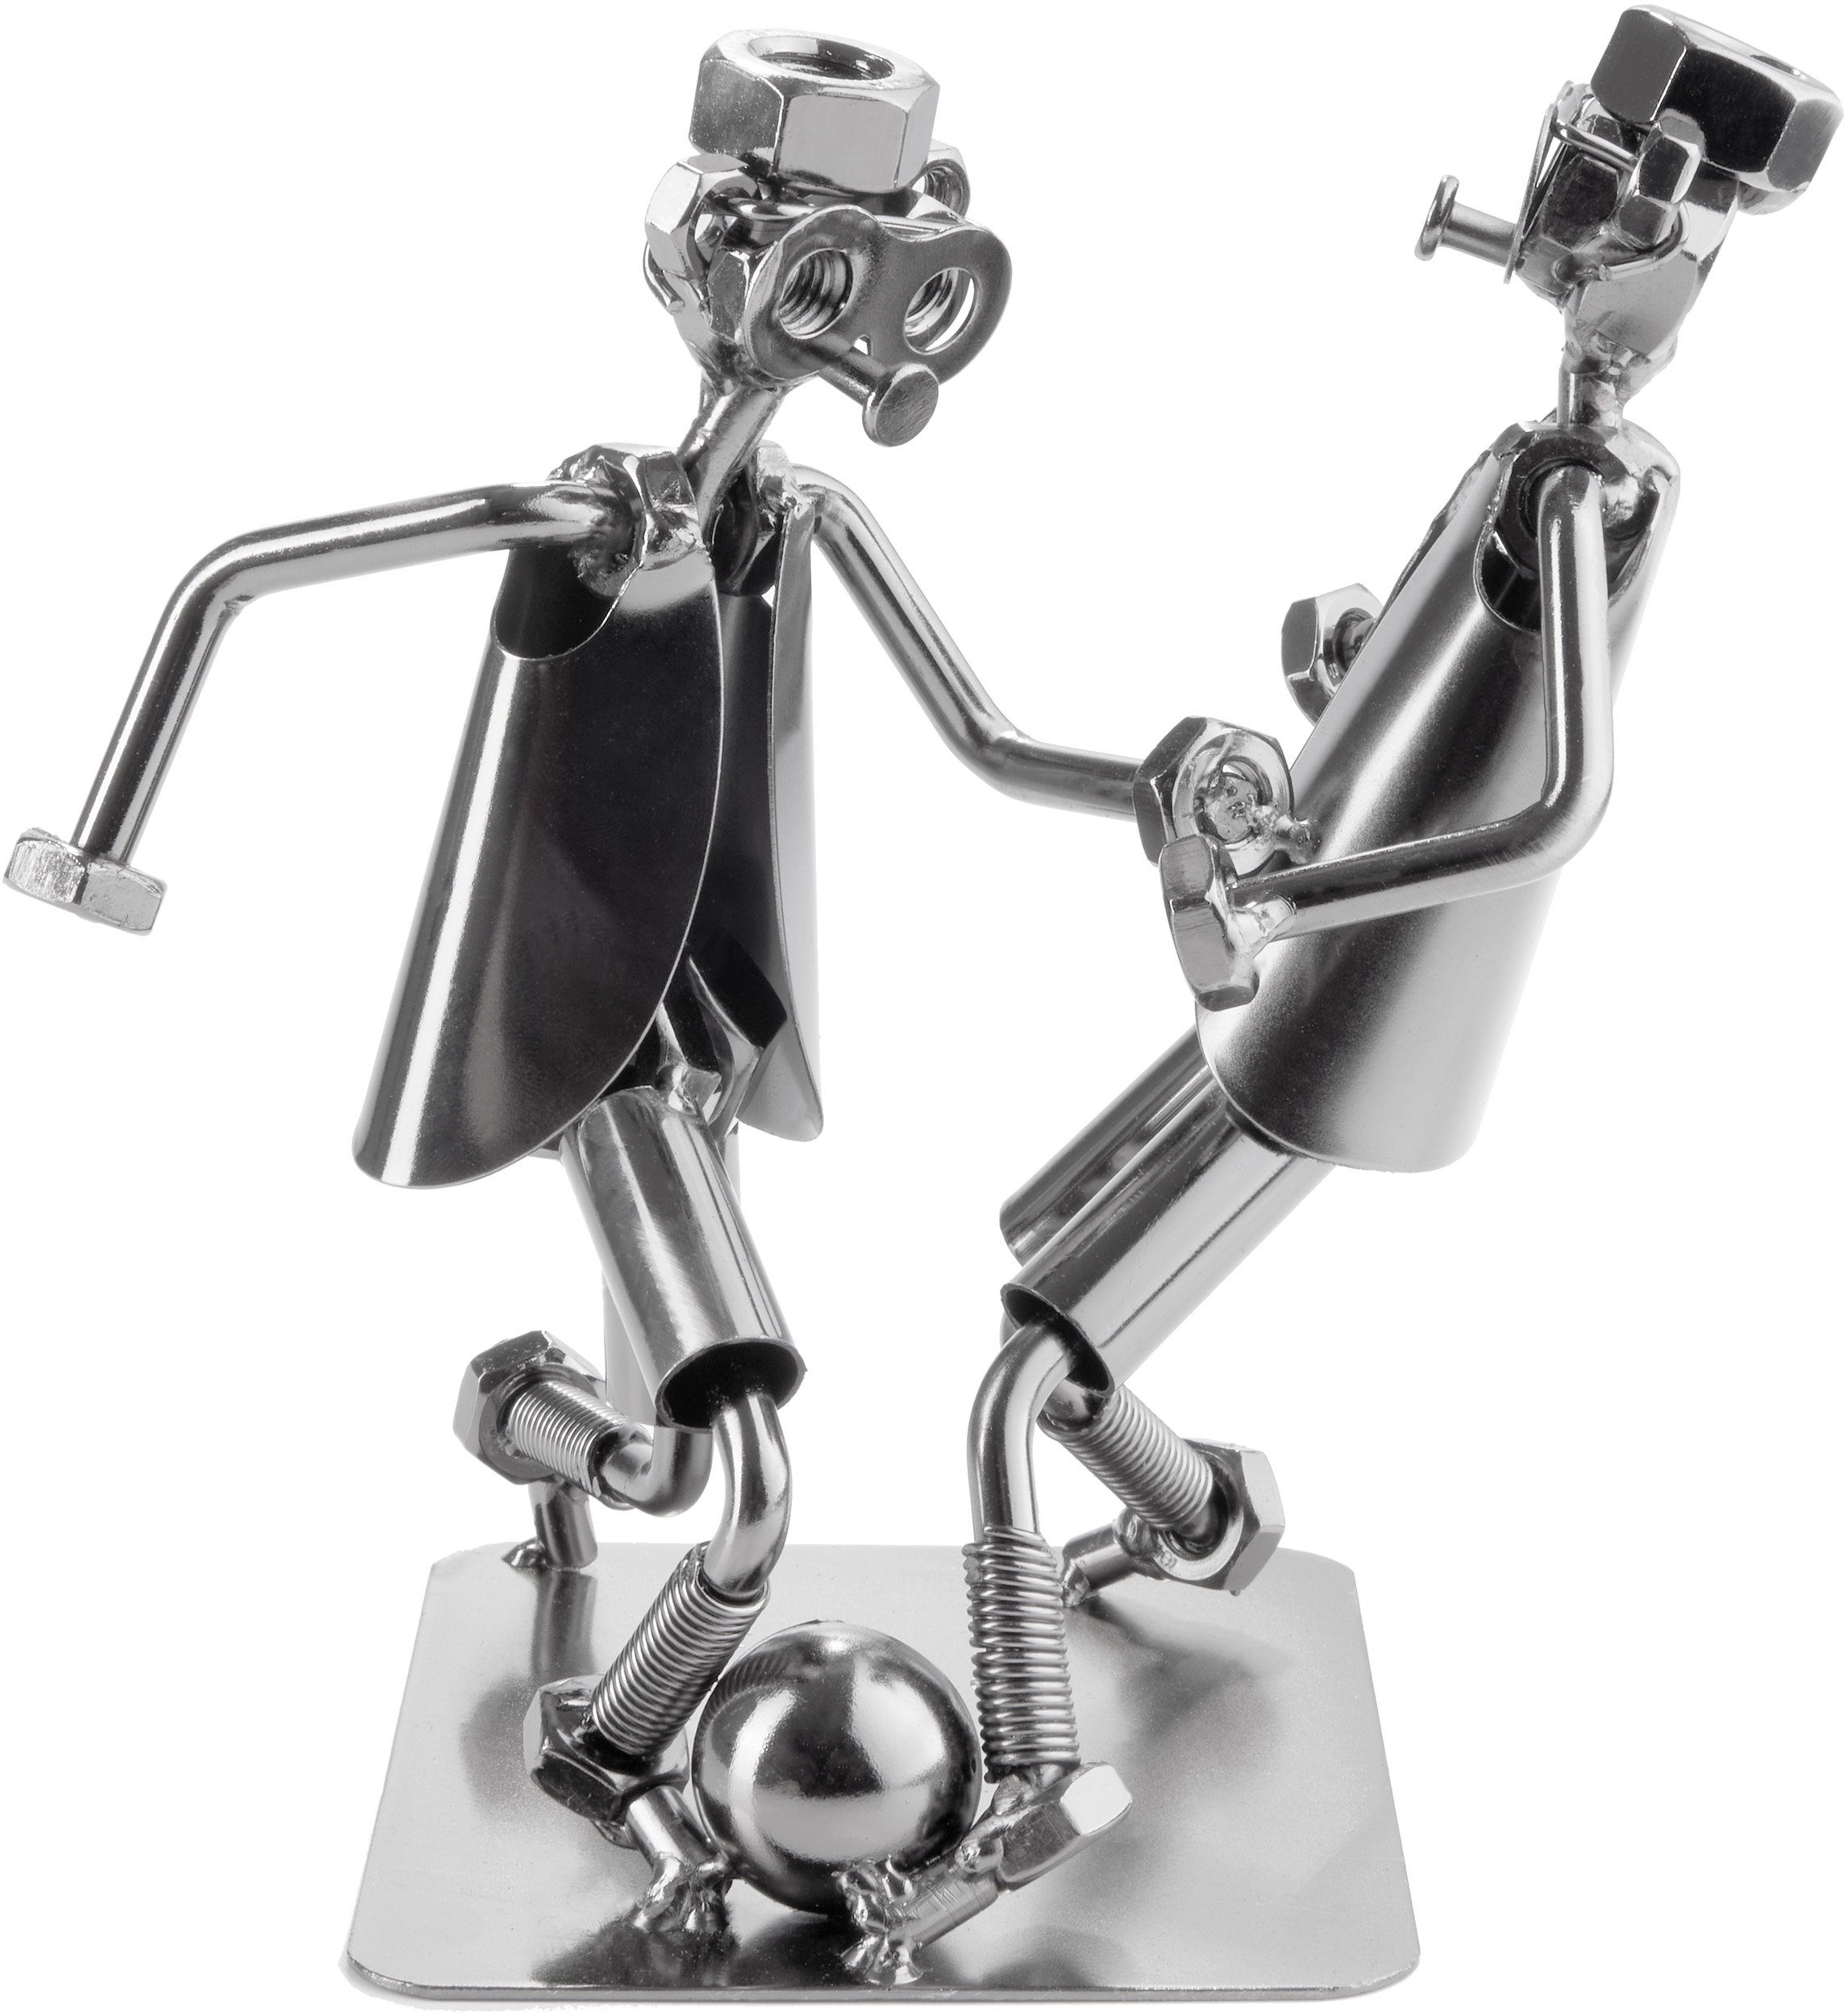 BRUBAKER Dekofigur Metallskulptur Schraubenmännchen Fußball Zweikampf (1 St), kunstvolle Geschenkfigur für Fußballer und Fußballerinnen, Metallfigur